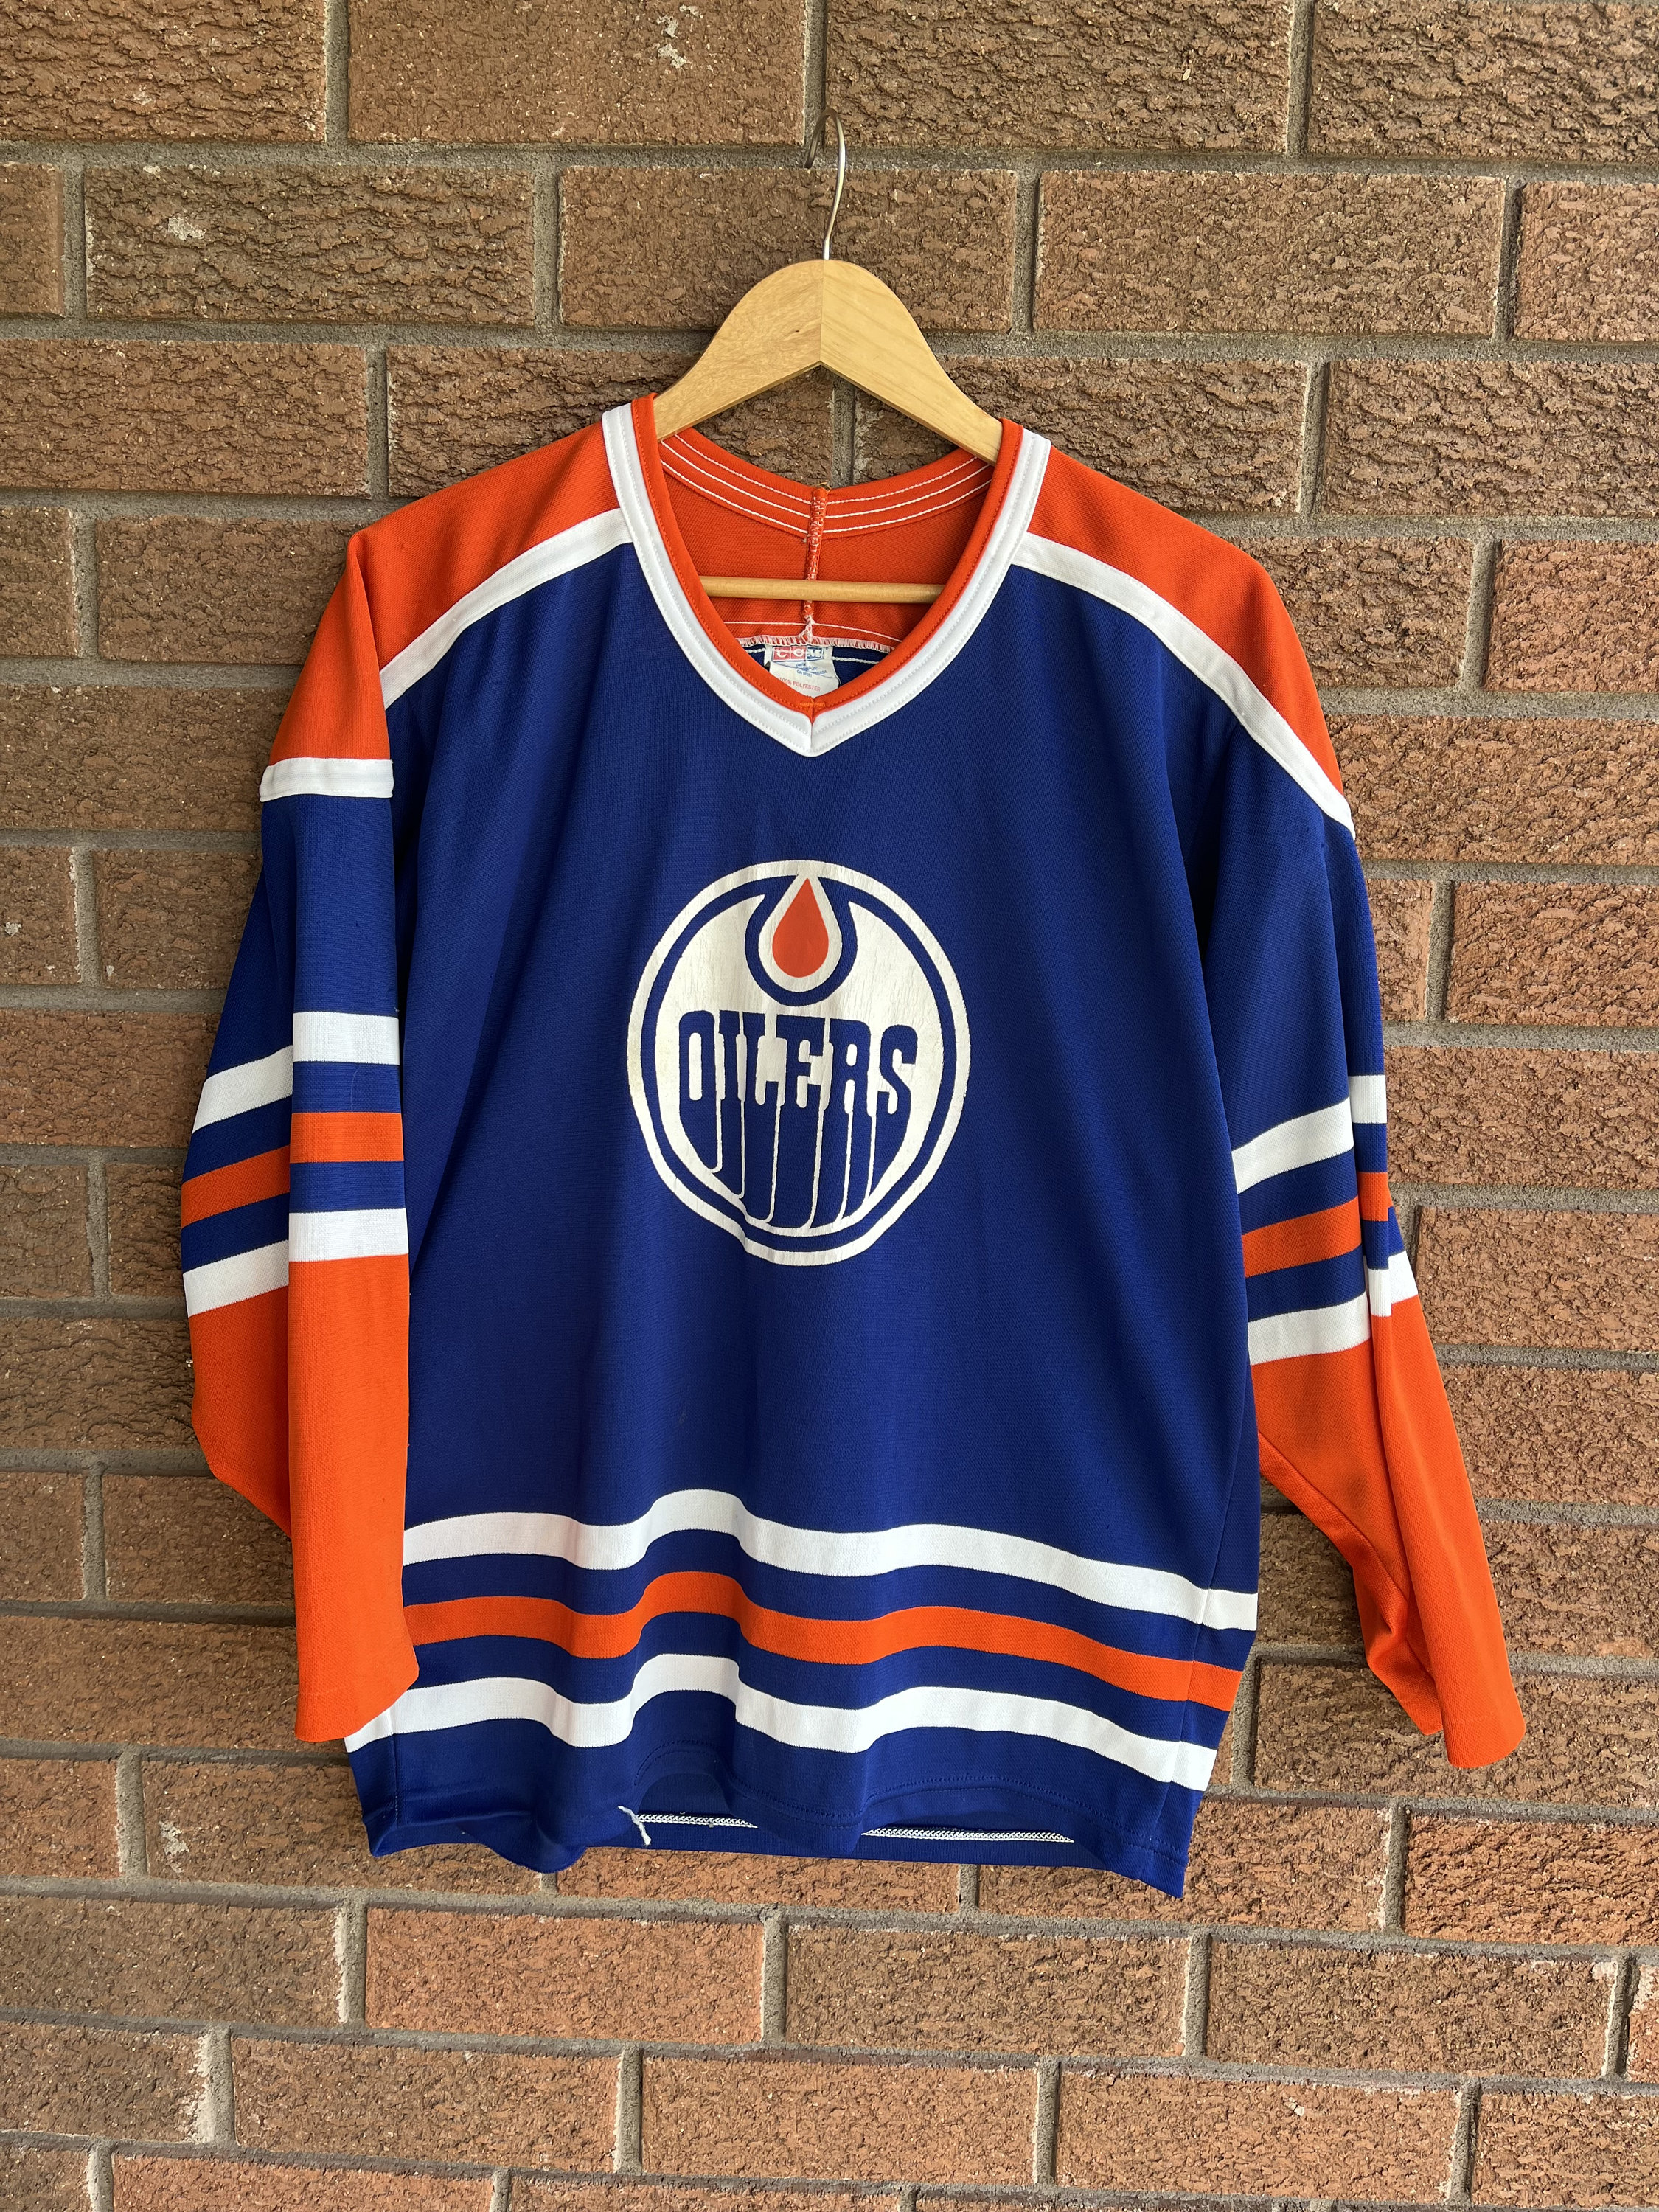 Edmonton Oilers Vintage Ccm Hockey Jersey Navy Blue and Orange Shirt